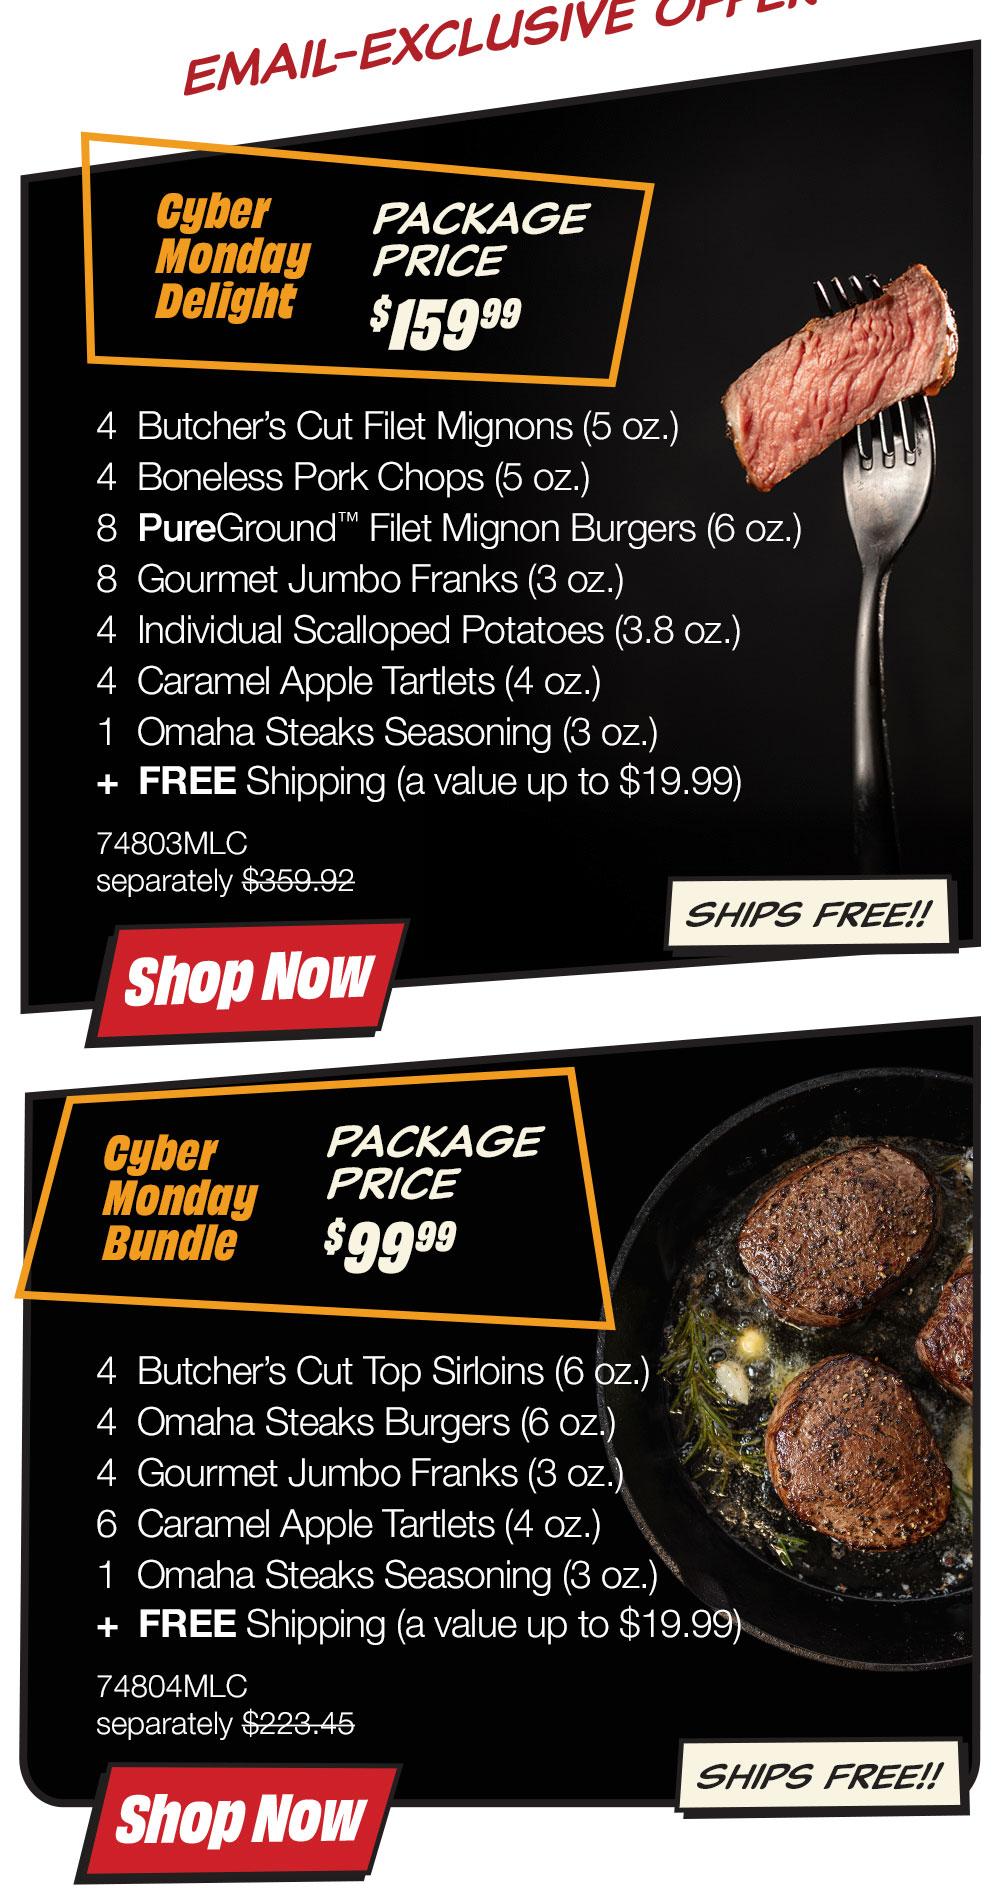 Email-exclusive offer | Cyber Monday Delight - PACKAGE PRICE $159.99 - 4 Butcher's Cut Filet Mignons (5 oz.) - 4 Boneless Pork Chops (5 oz.) - 8 PureGround™ Filet Mignon Burgers (6 oz.) - 8 Gourmet Jumbo Franks (3 oz.) - 4 Individual Scalloped Potatoes (3.8 oz.) - 4 Caramel Apple Tartlets (4 oz.) - 1 Omaha Steaks Seasoning (3 oz.) - 74803MLC separately $359.92 || Shop Now || SHIPS FREE!! | Cyber Monday Bundle - PACKAGE PRICE $99.99 - 4 Butcher's Cut Top Sirloins (6 oz.) - 4 Omaha Steaks Burgers (6 oz.) - 4 Gourmet Jumbo Franks (3 oz.) - 6 Caramel Apple Tartlets (4 oz.) - 1 Omaha Steaks Seasoning (3 oz.) - 74804MLC separately $223.45 || Shop Now || SHIPS FREE!!